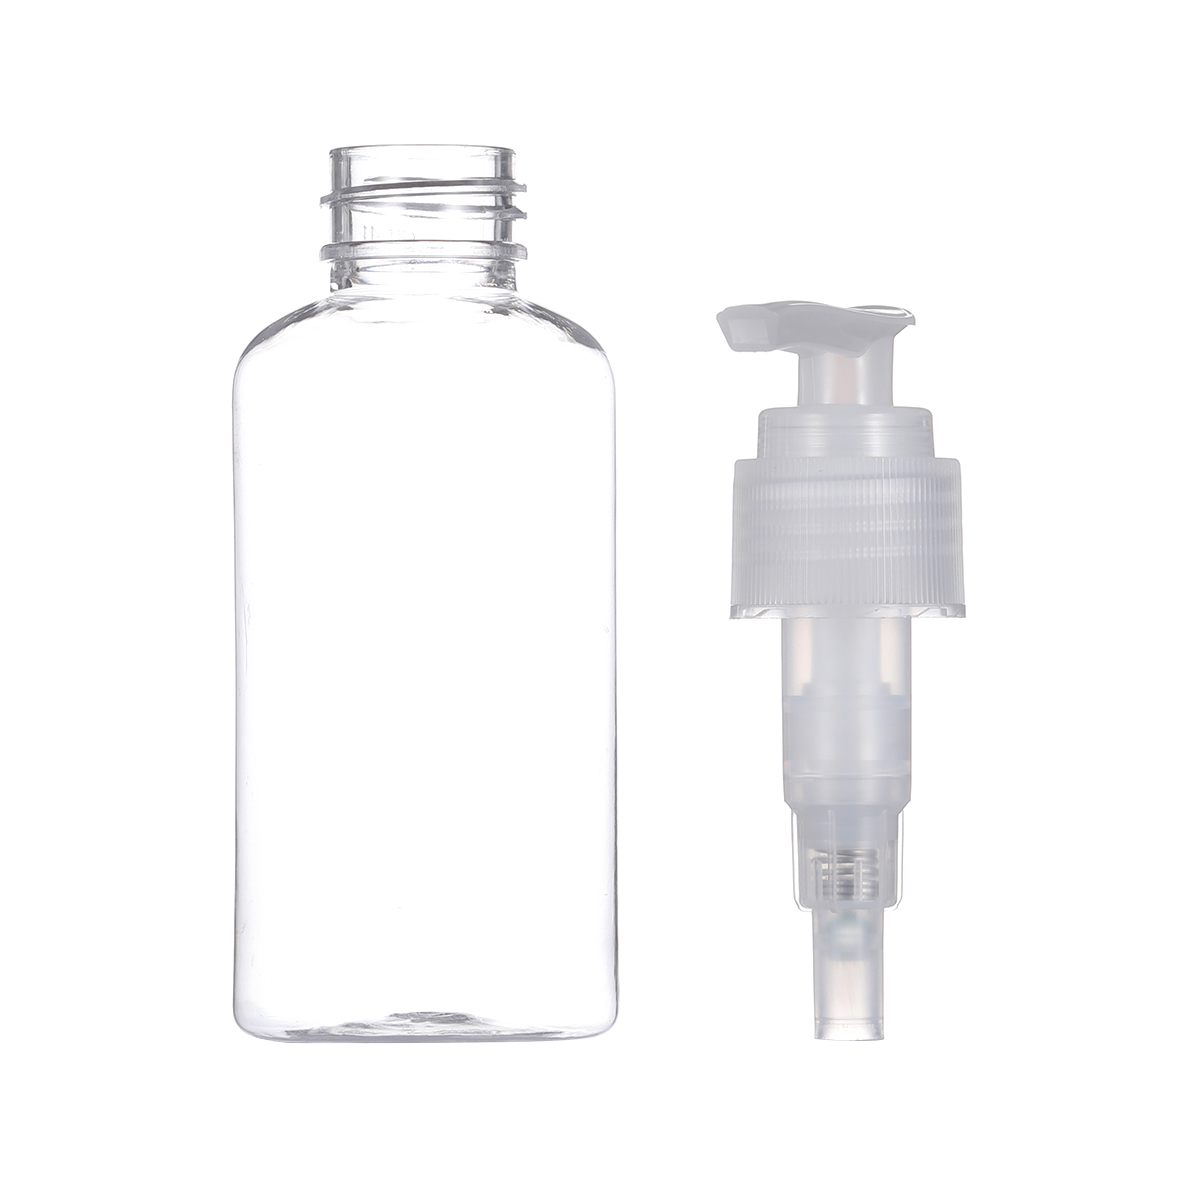 Small spray bottle alcohol disinfection spray bottle